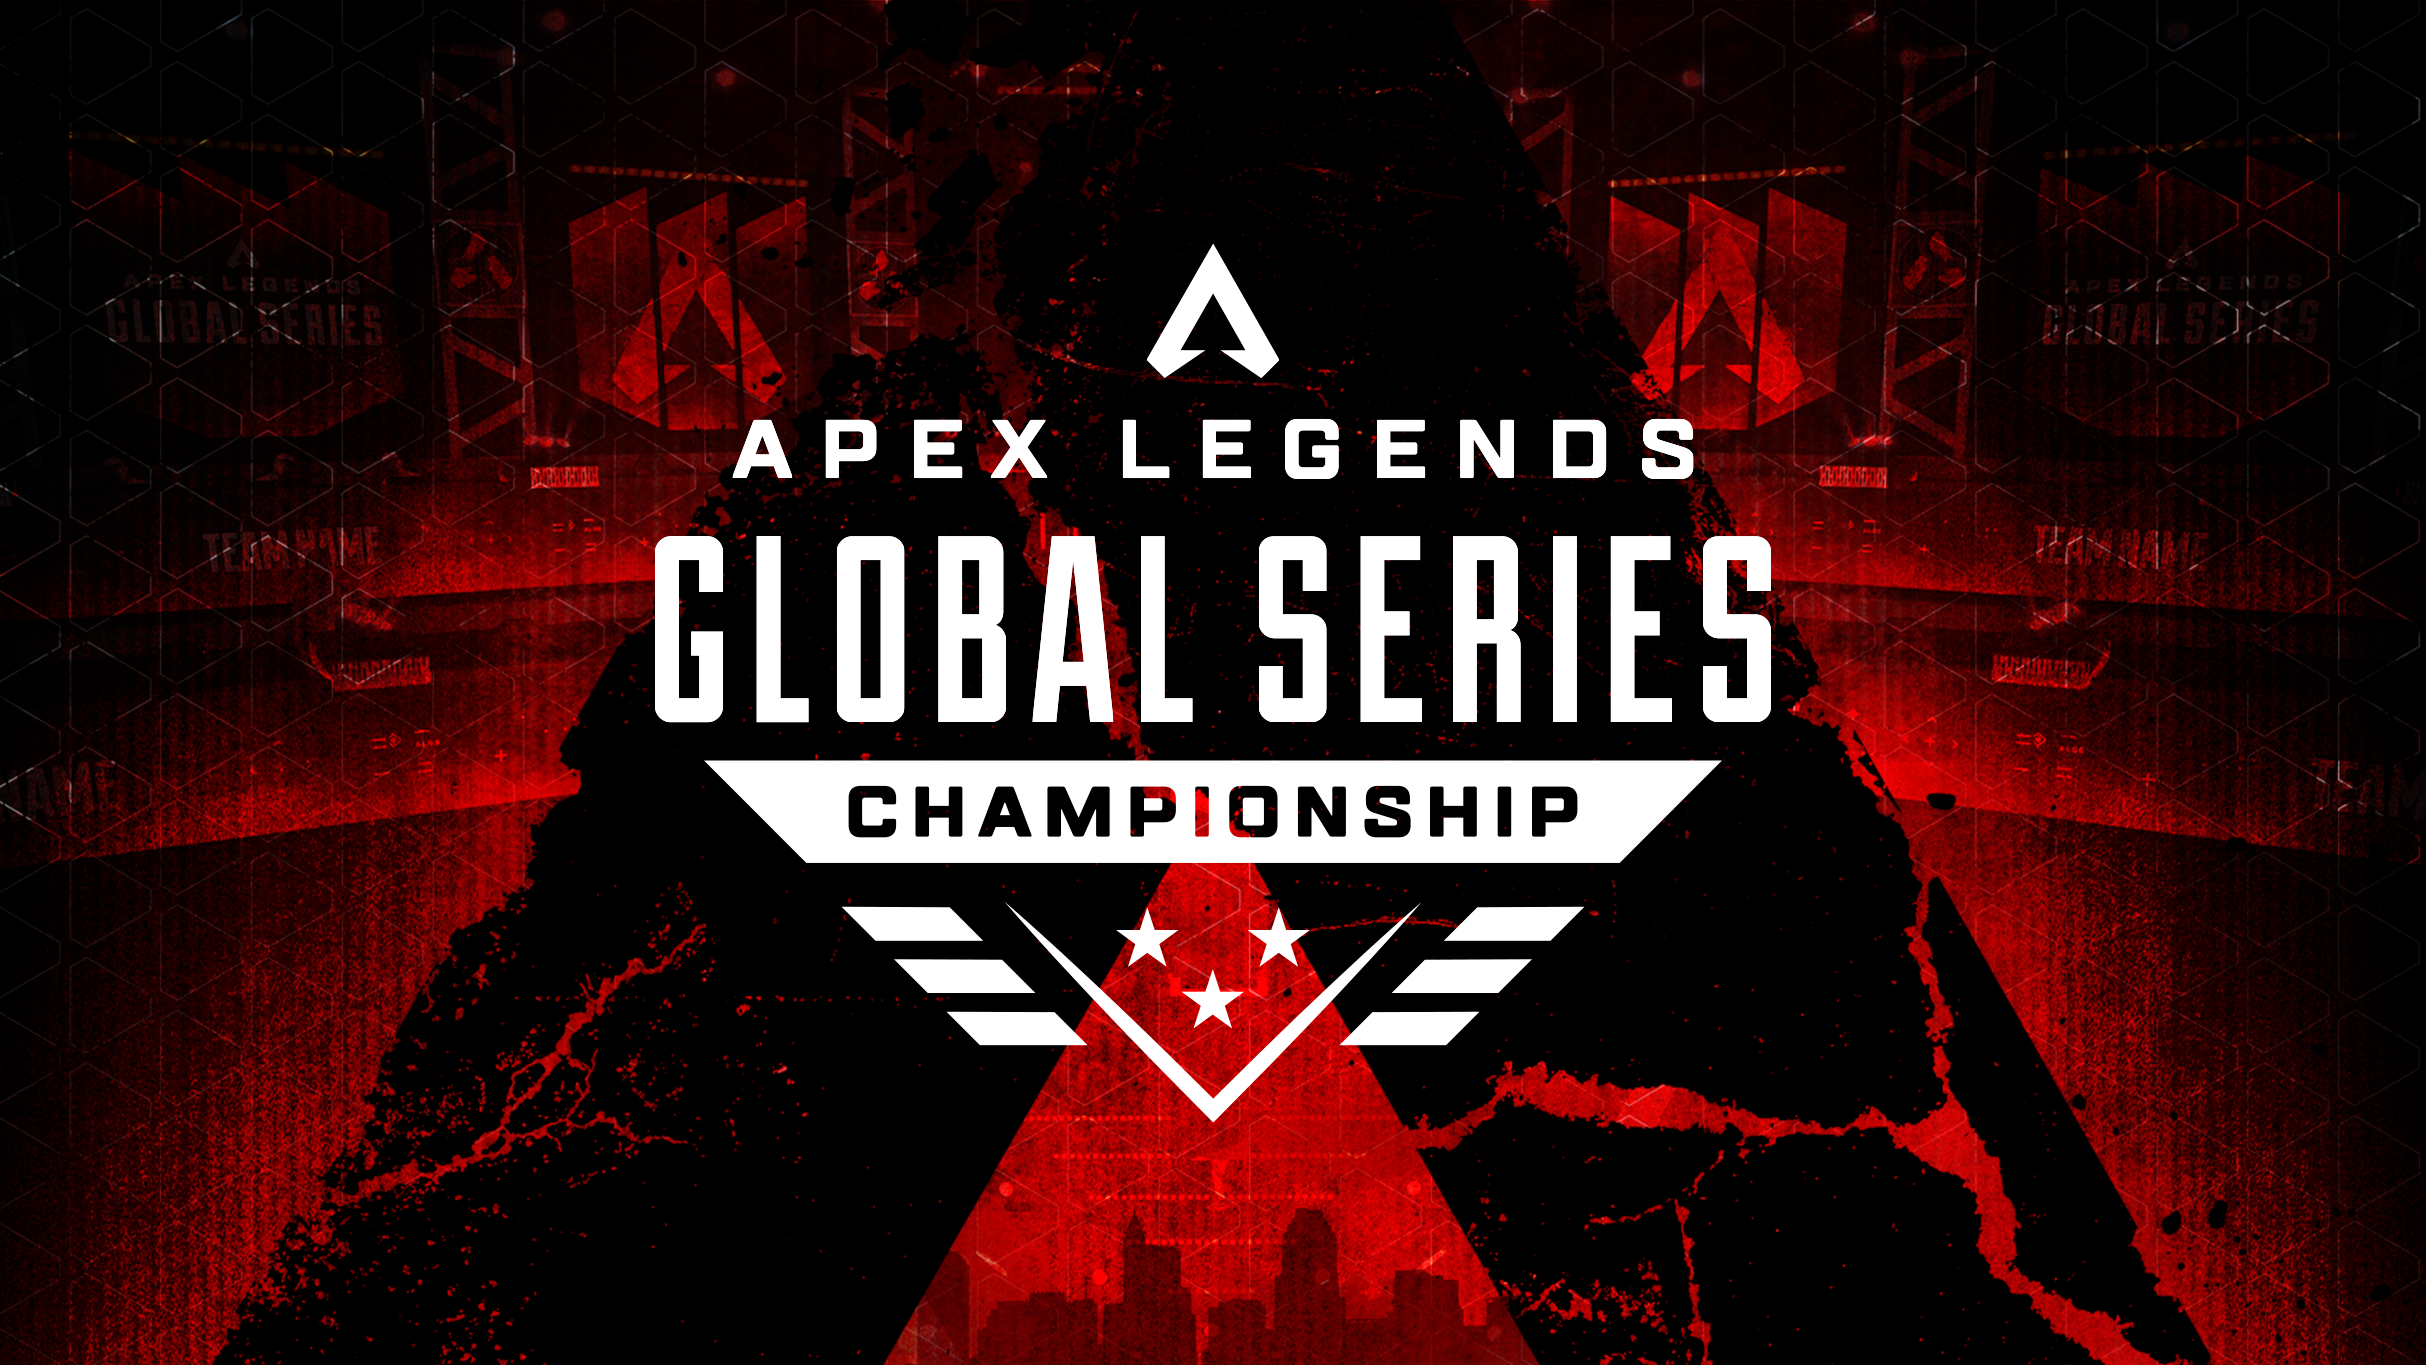 Apex Legends Global Series Championship presale information on freepresalepasswords.com